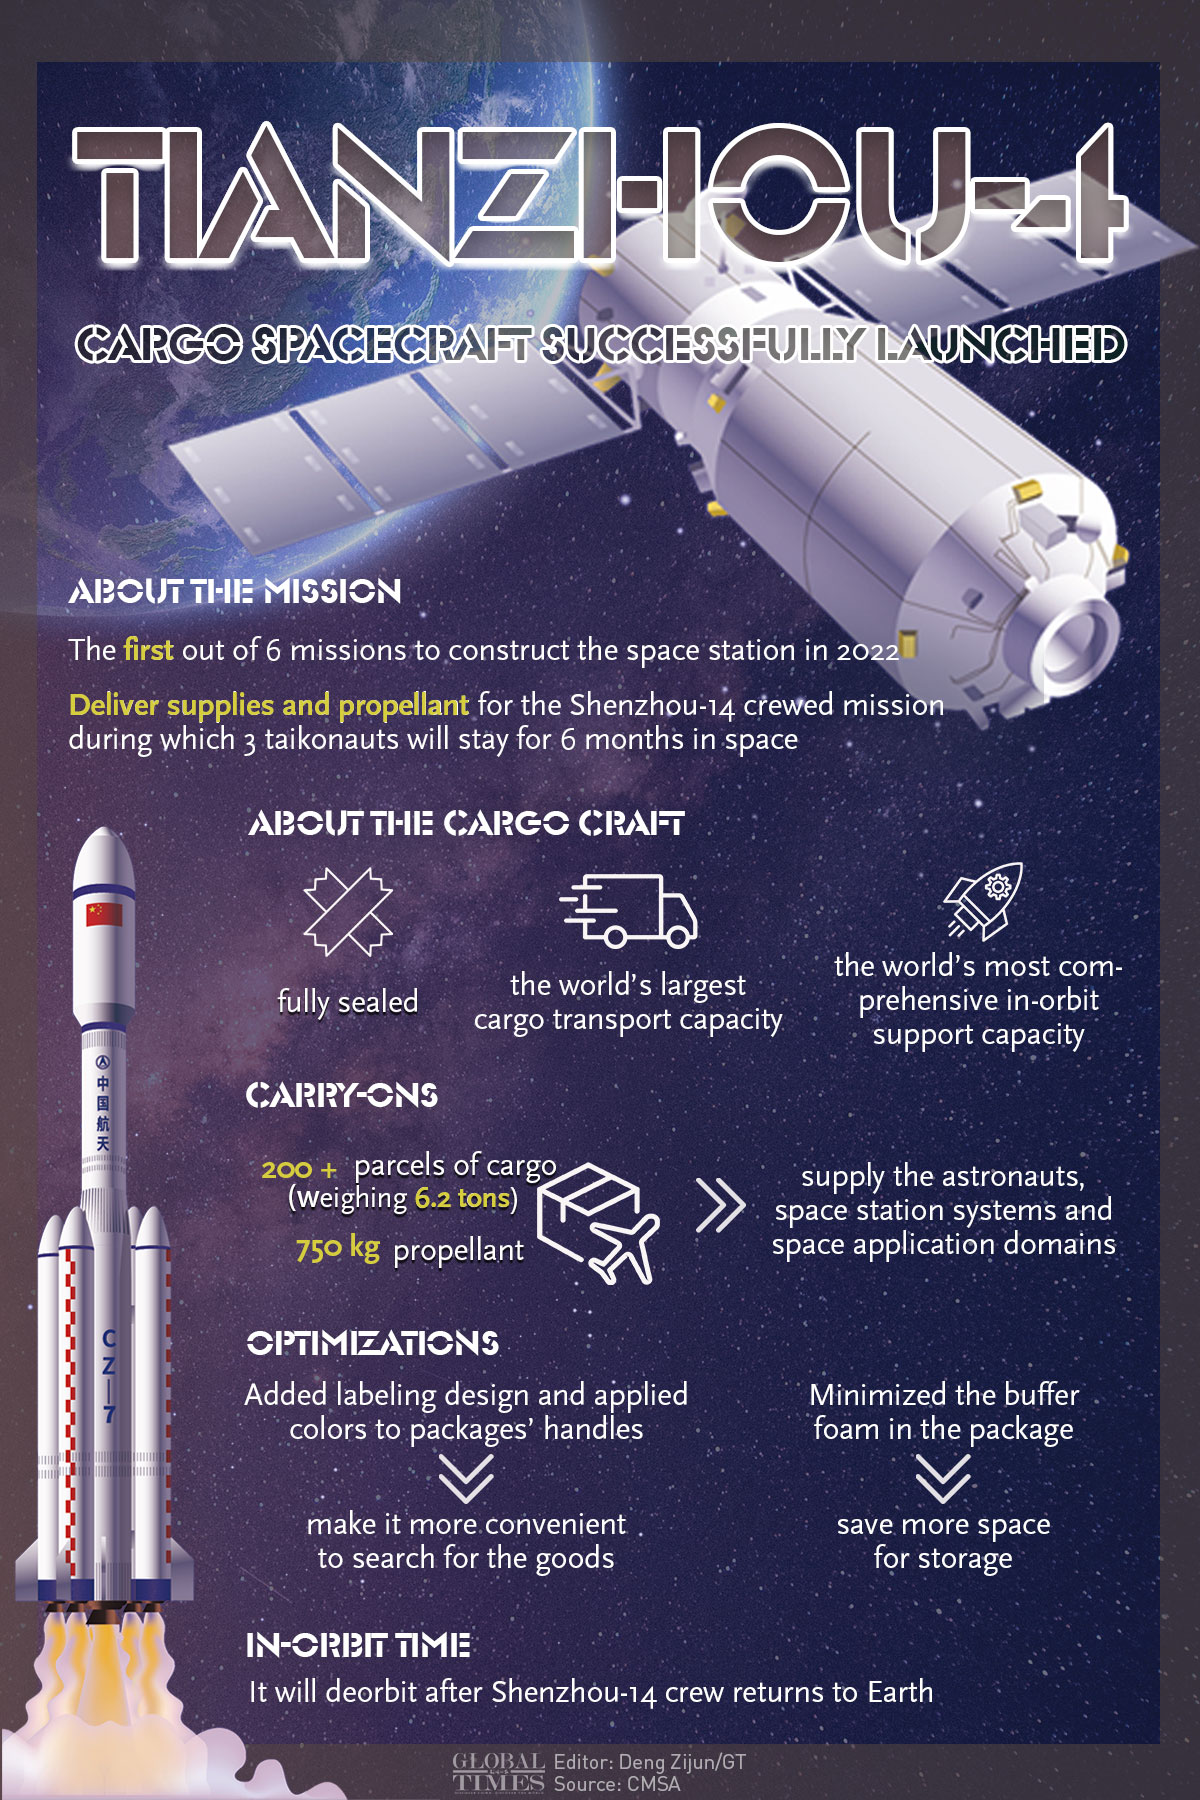 Tianzhou-4 cargo spacecraft successfully launched Infographic: Deng Zijun/GT